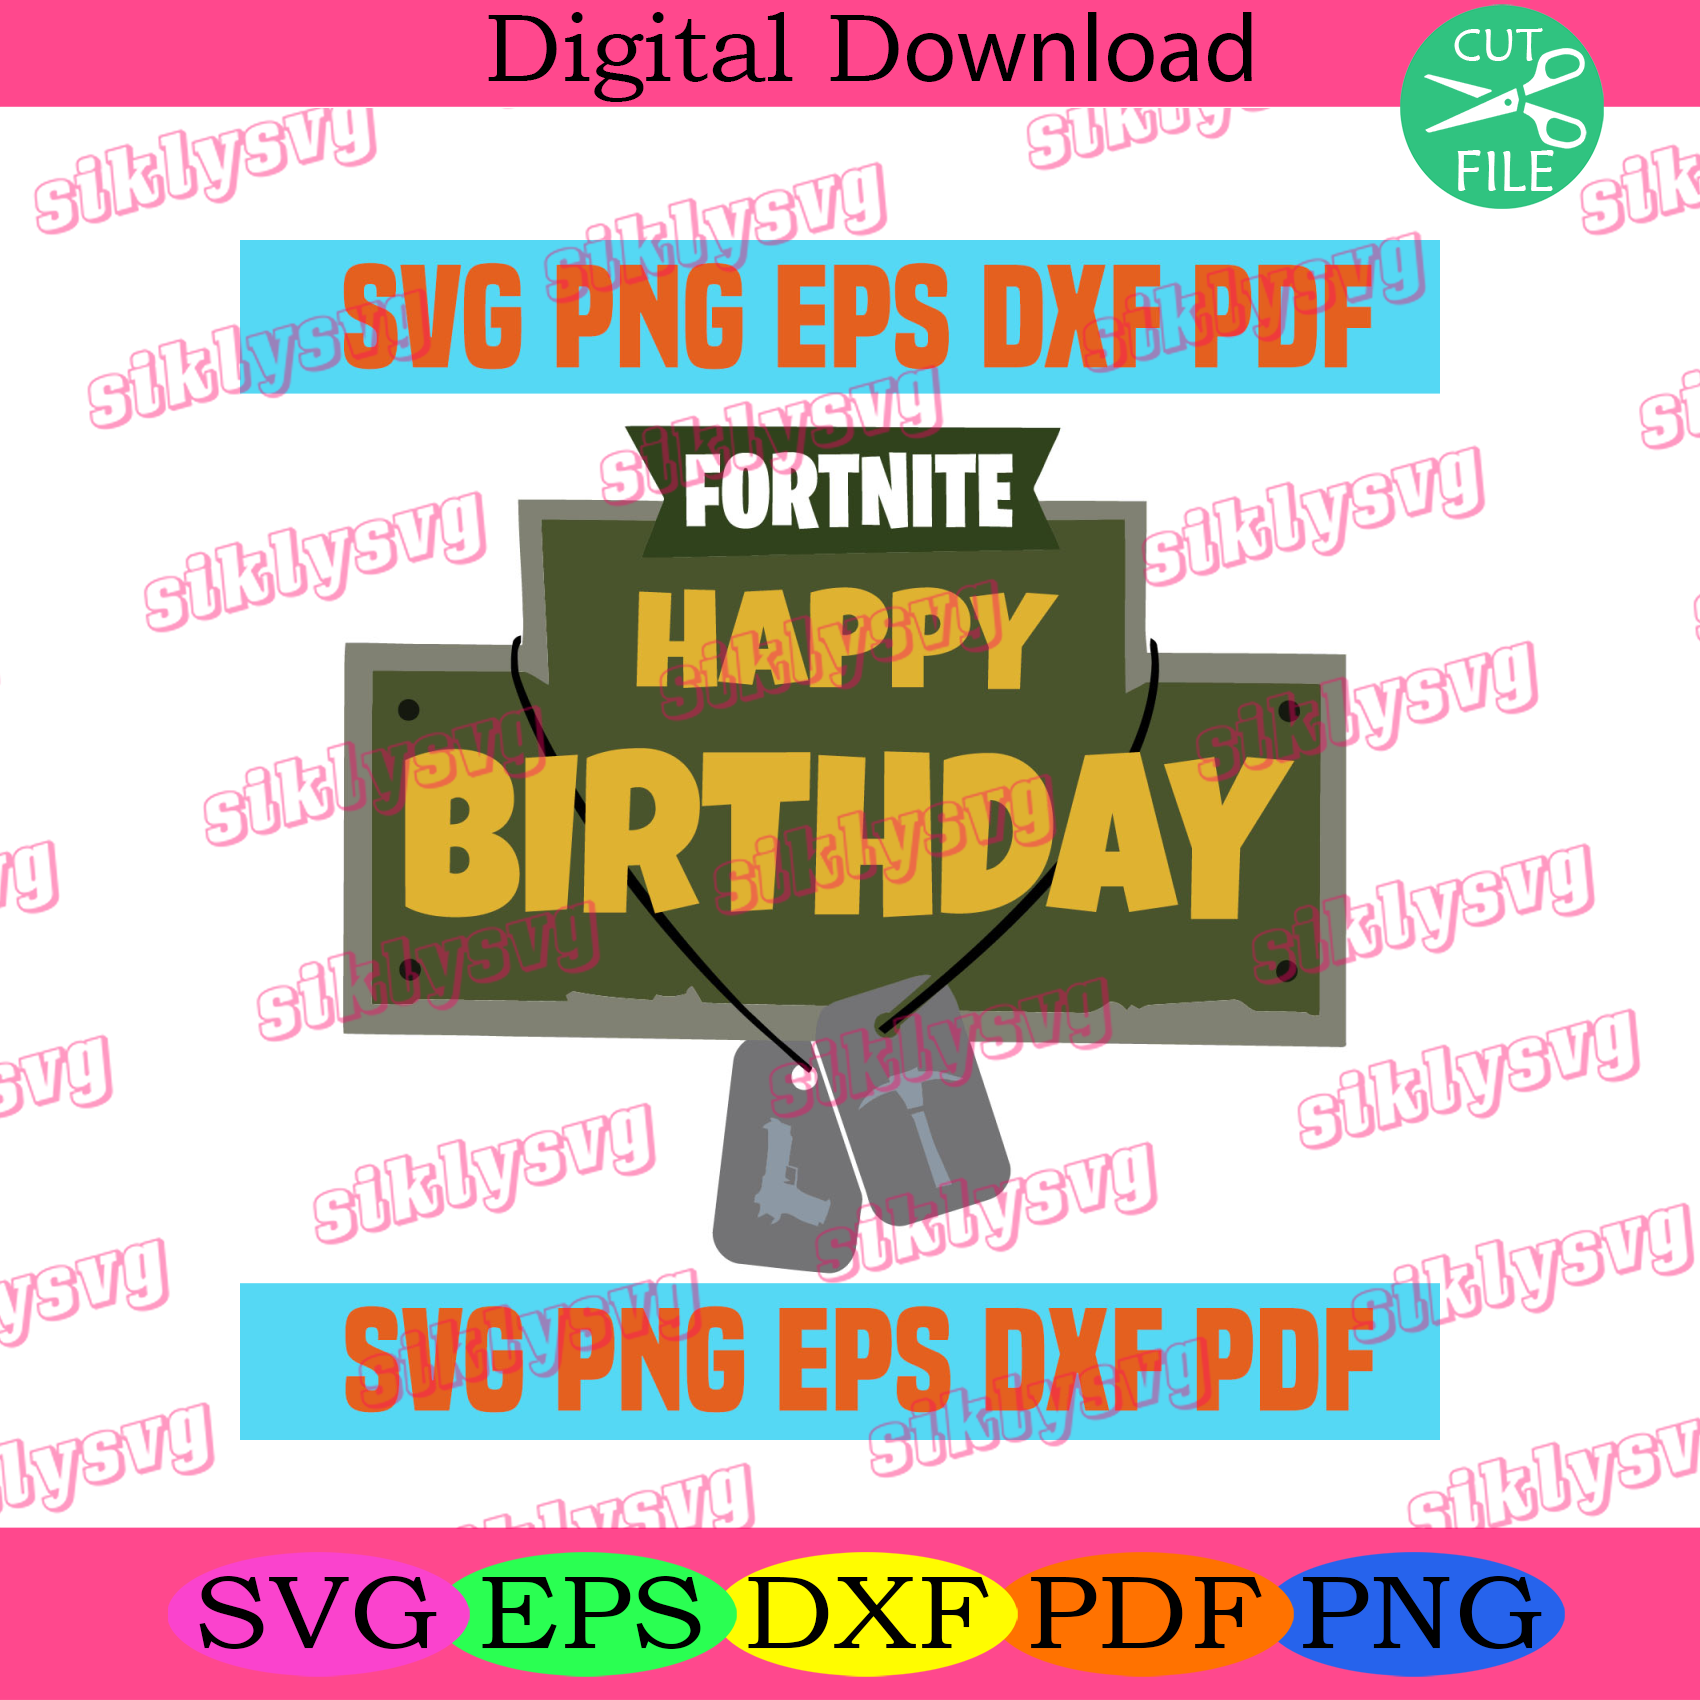 Download Fortnite Svg Fortnite Happy Birthday Svg Svg Svg Cricut Silhouette Svg Files Cricut Svg Silhouette Svg Svg Designs Vinyl Svg Silkysvg